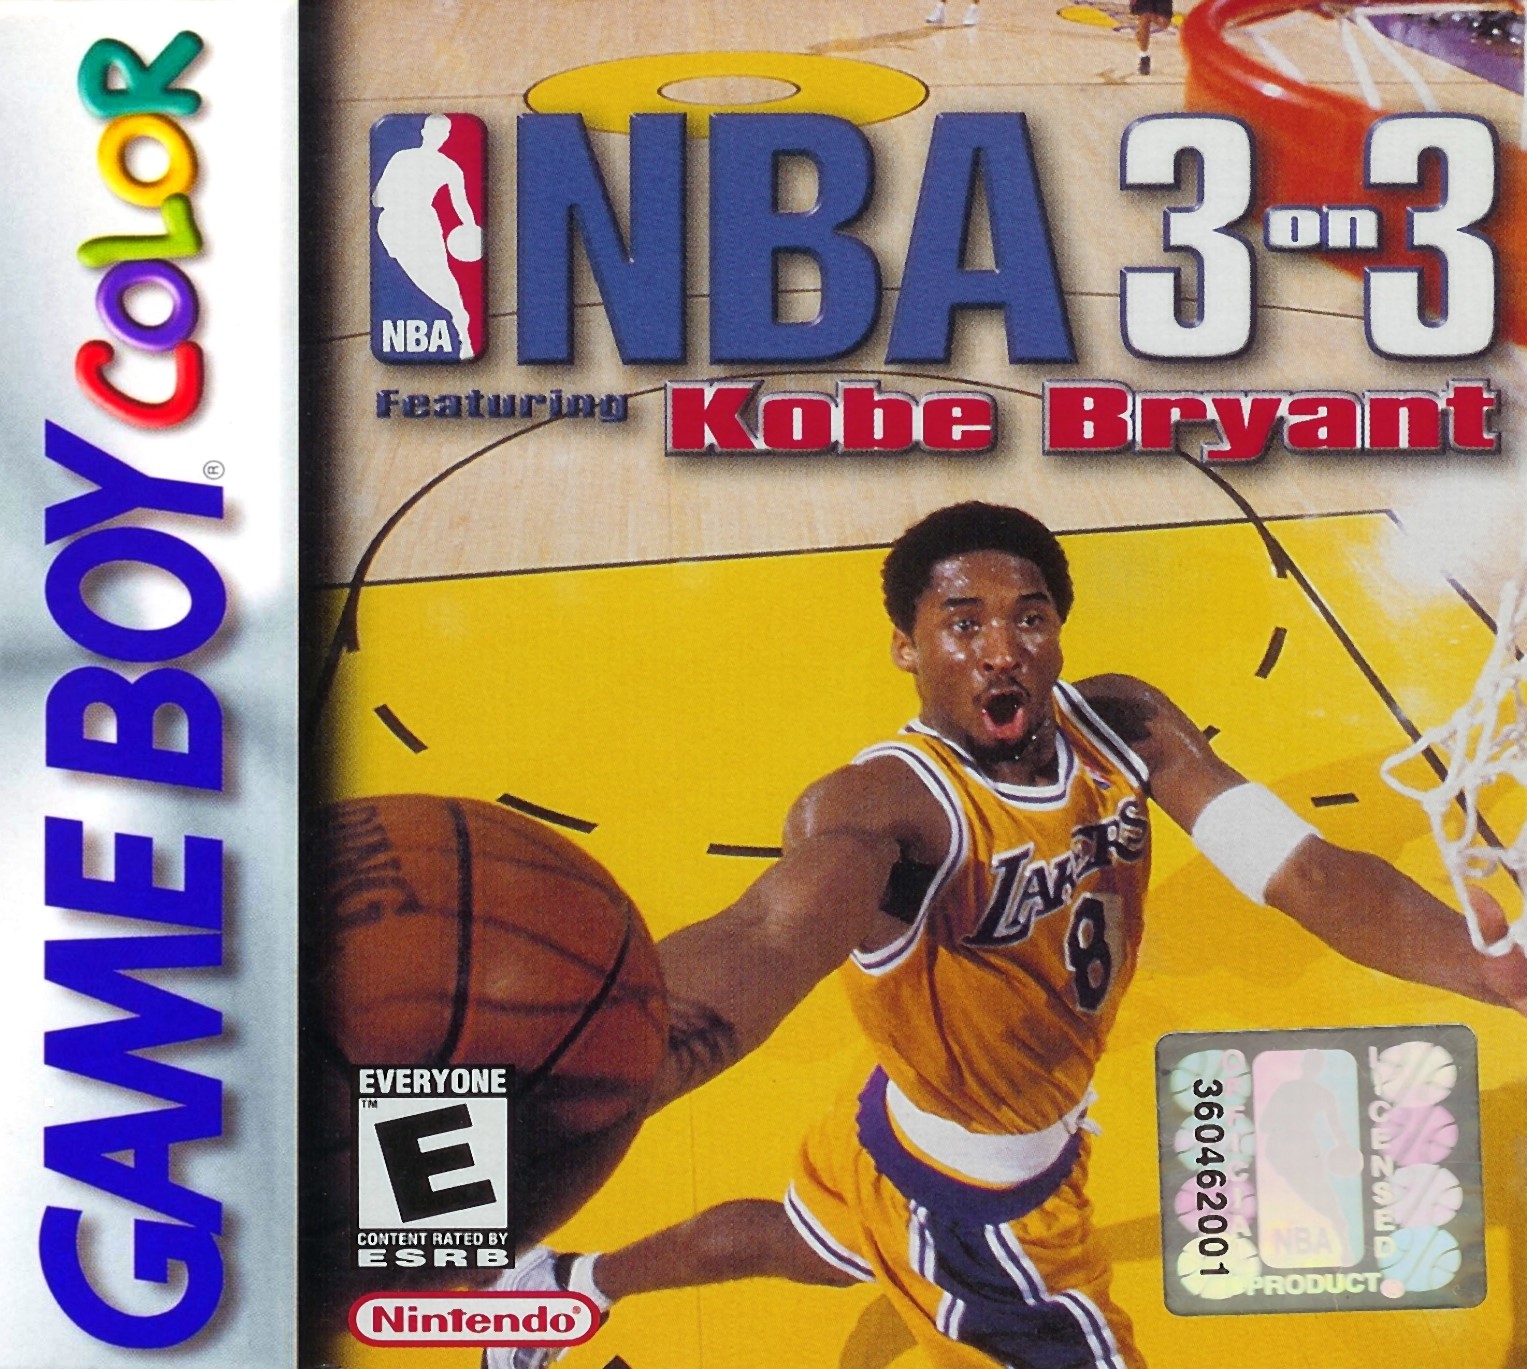 'NBA:-3-on-3 Kobe Bryant'